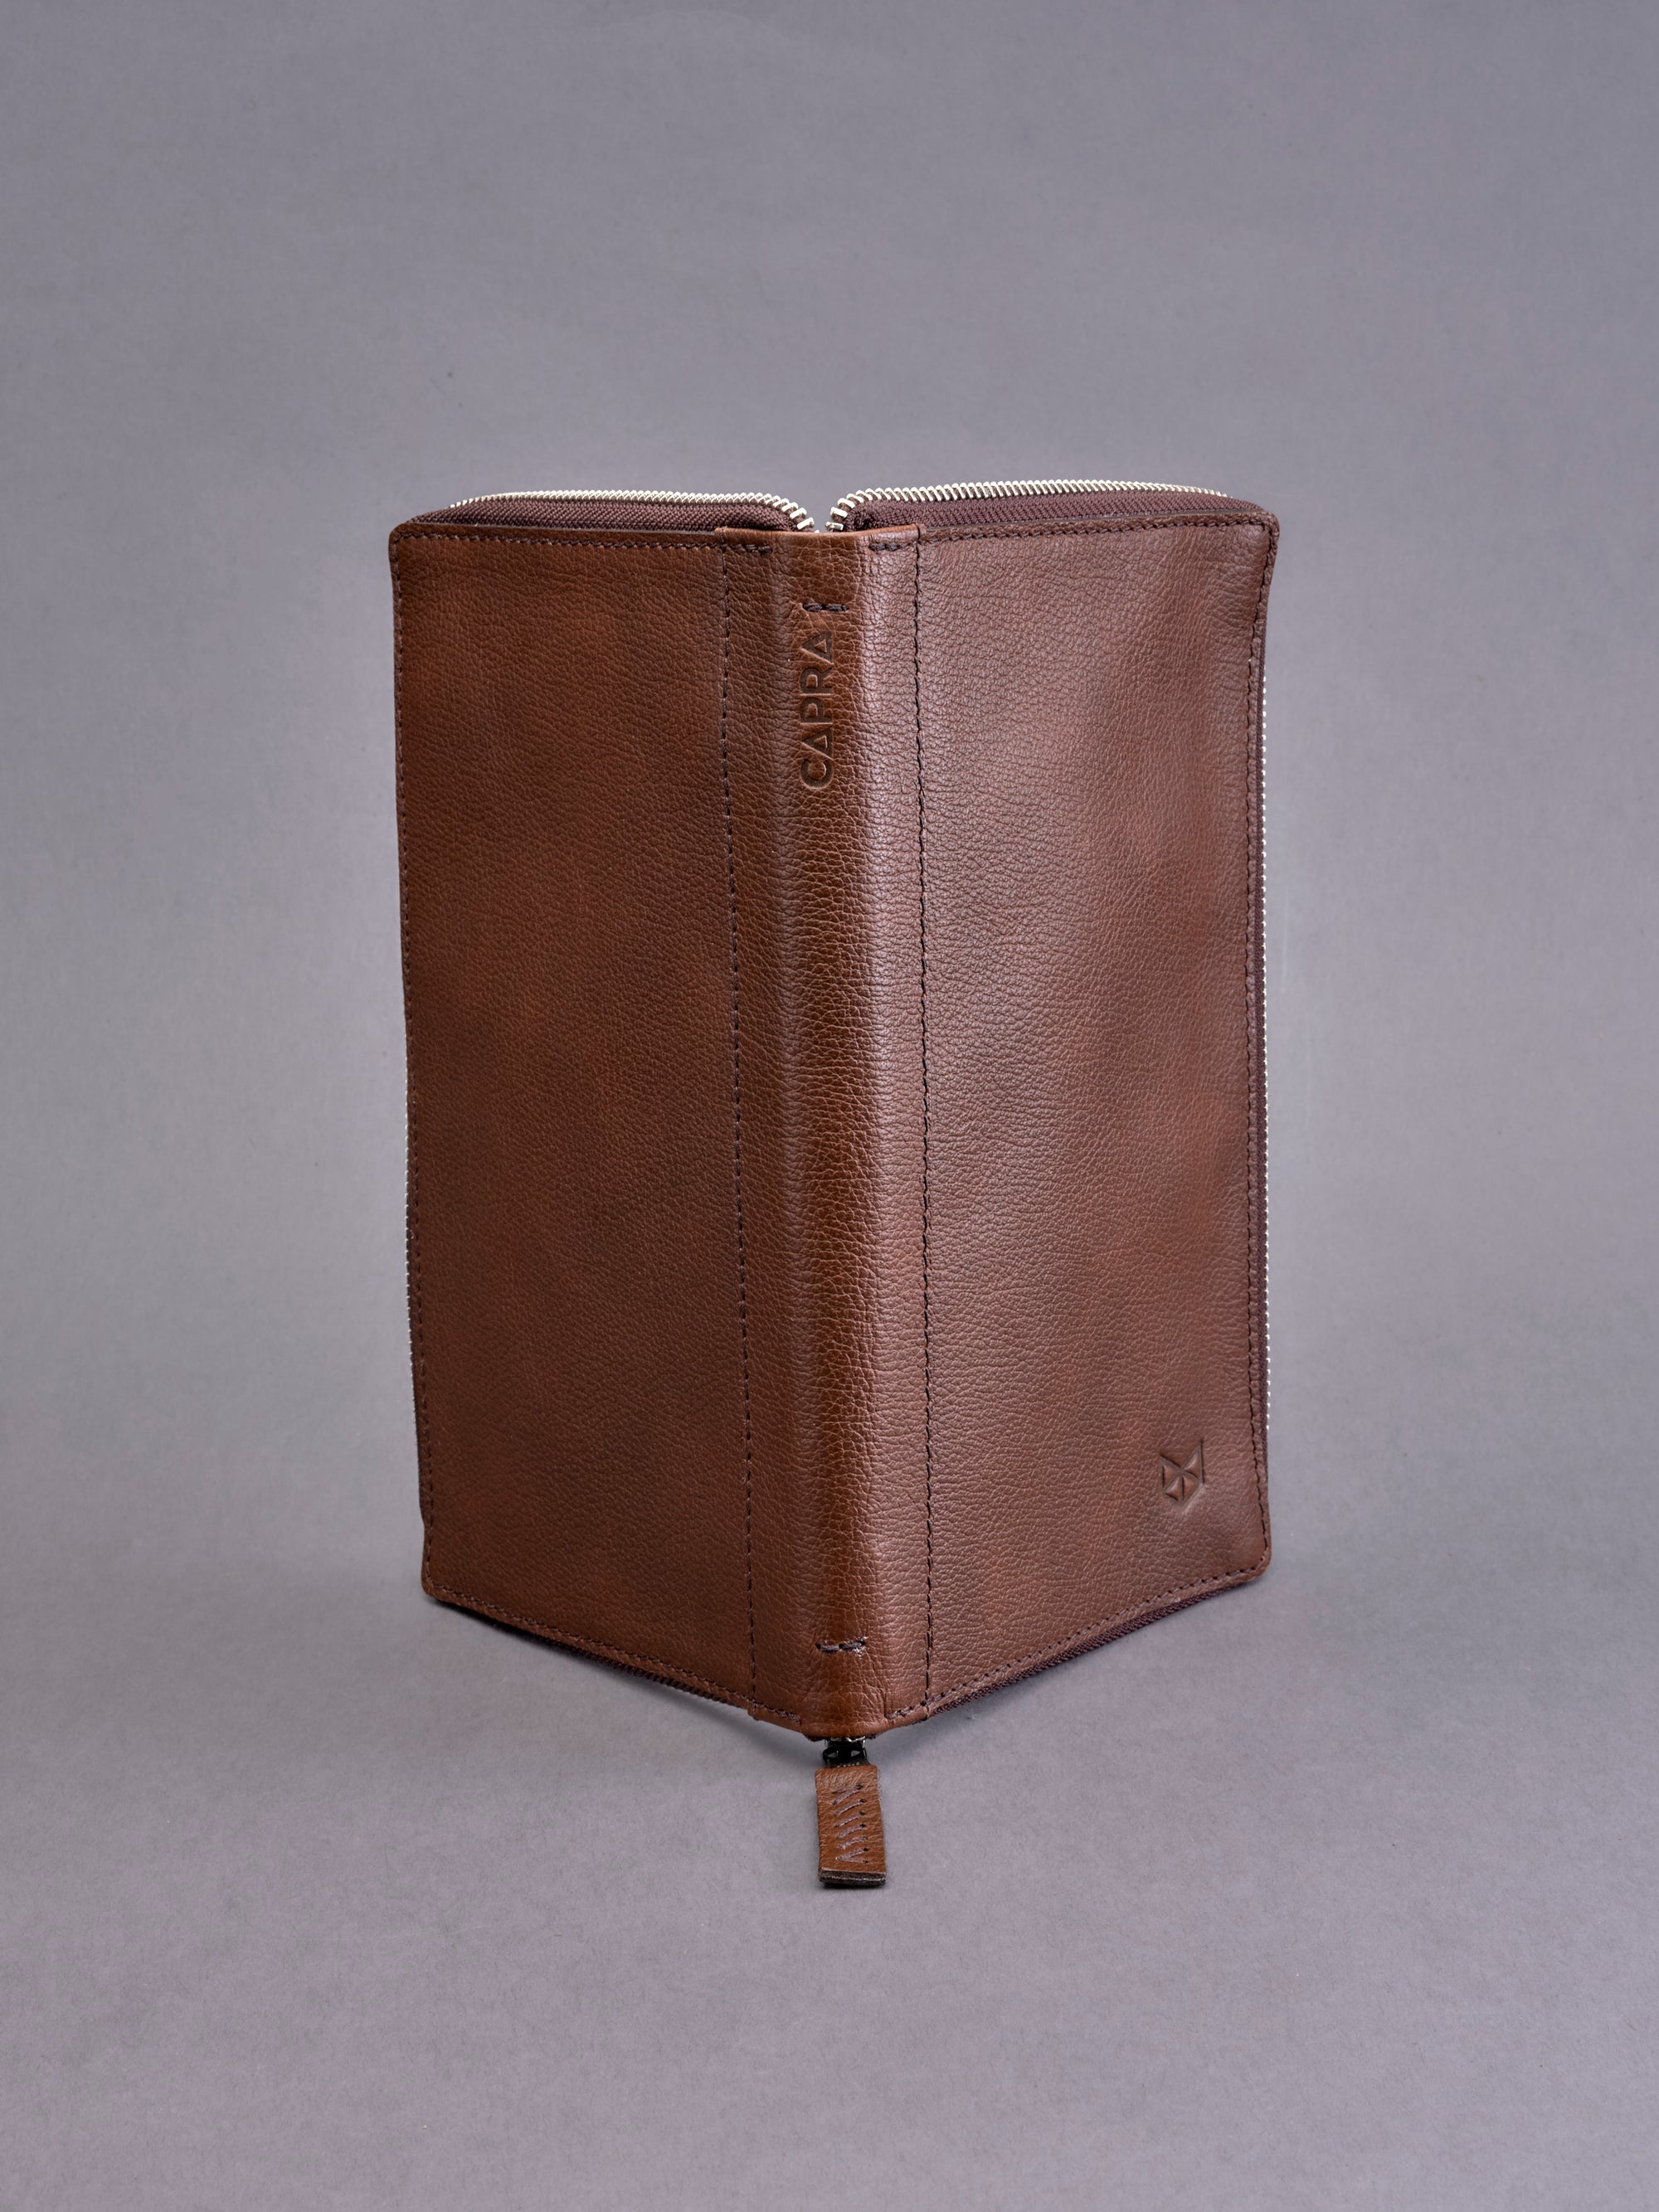 Full grain leather. Brown Passport Holder for travelers, document organizer, travel journal by Capra Leather